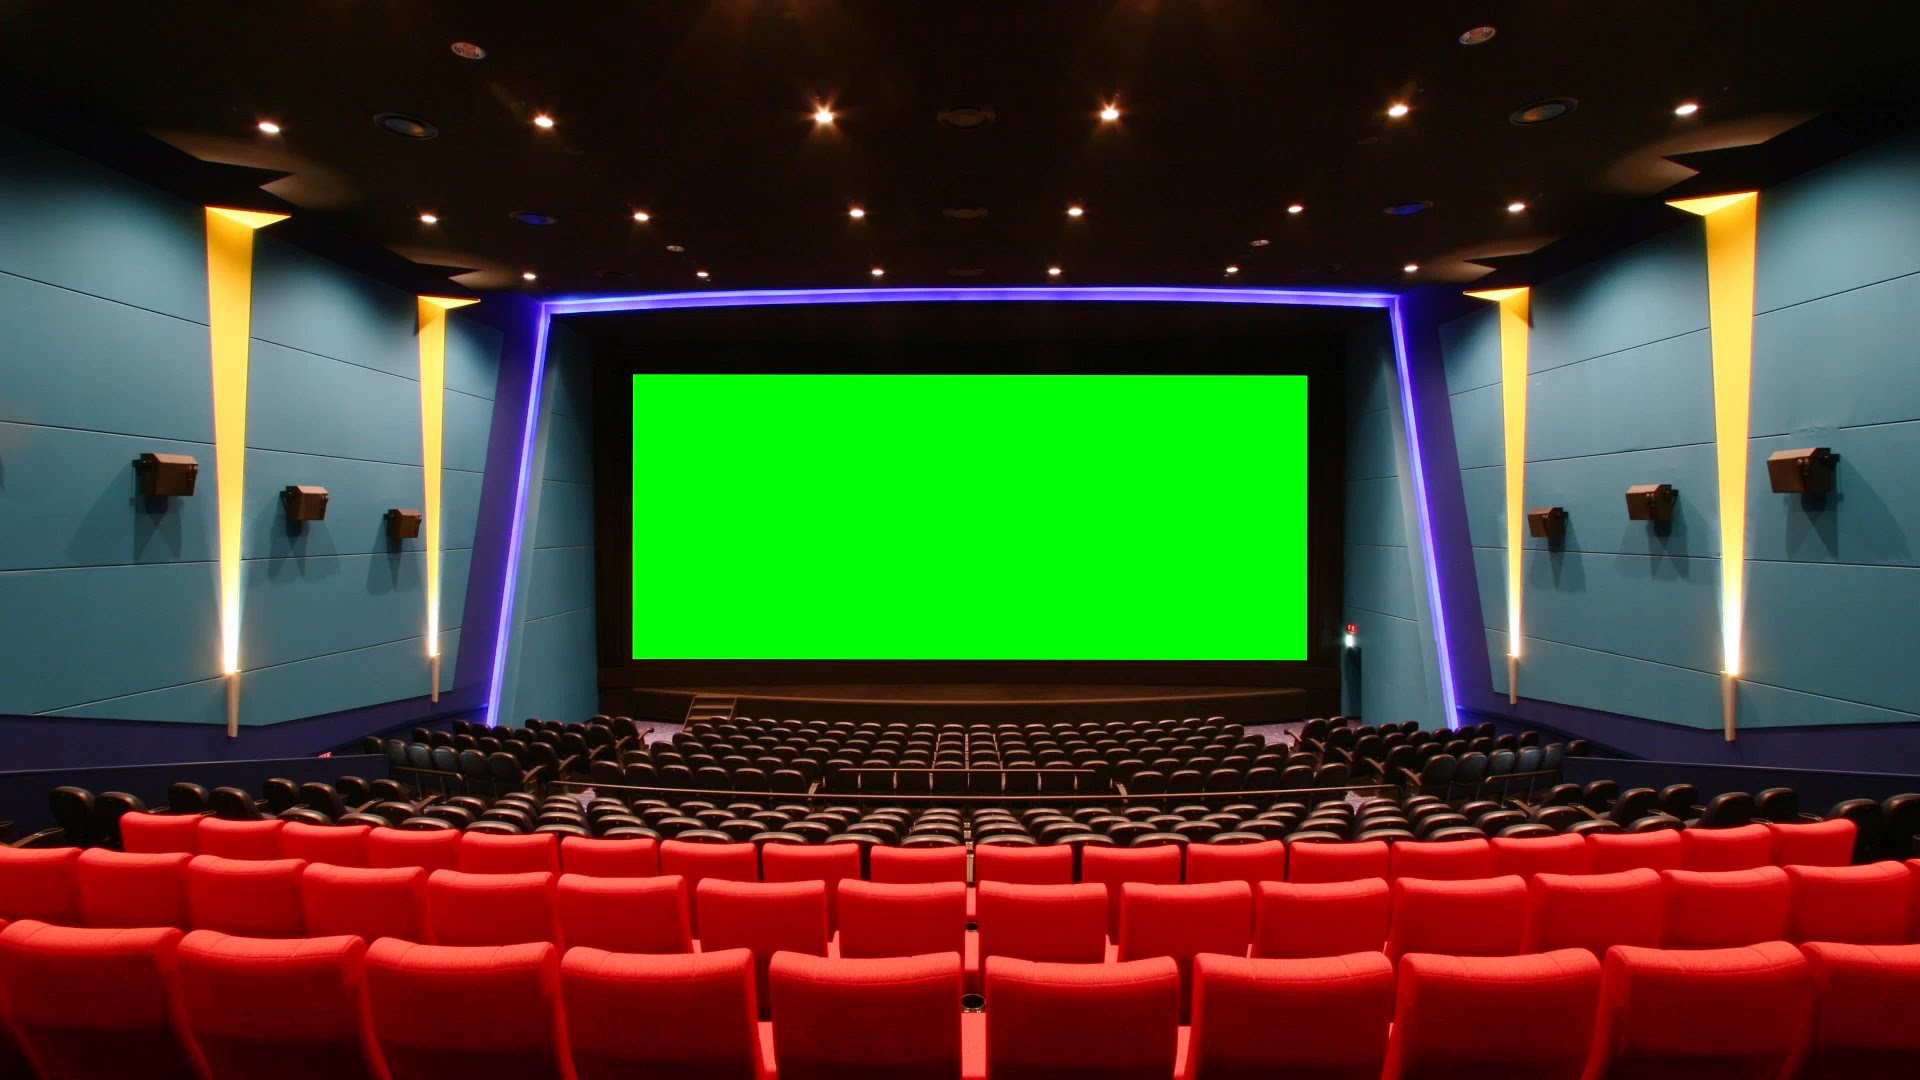 Inside movie theater risky photo